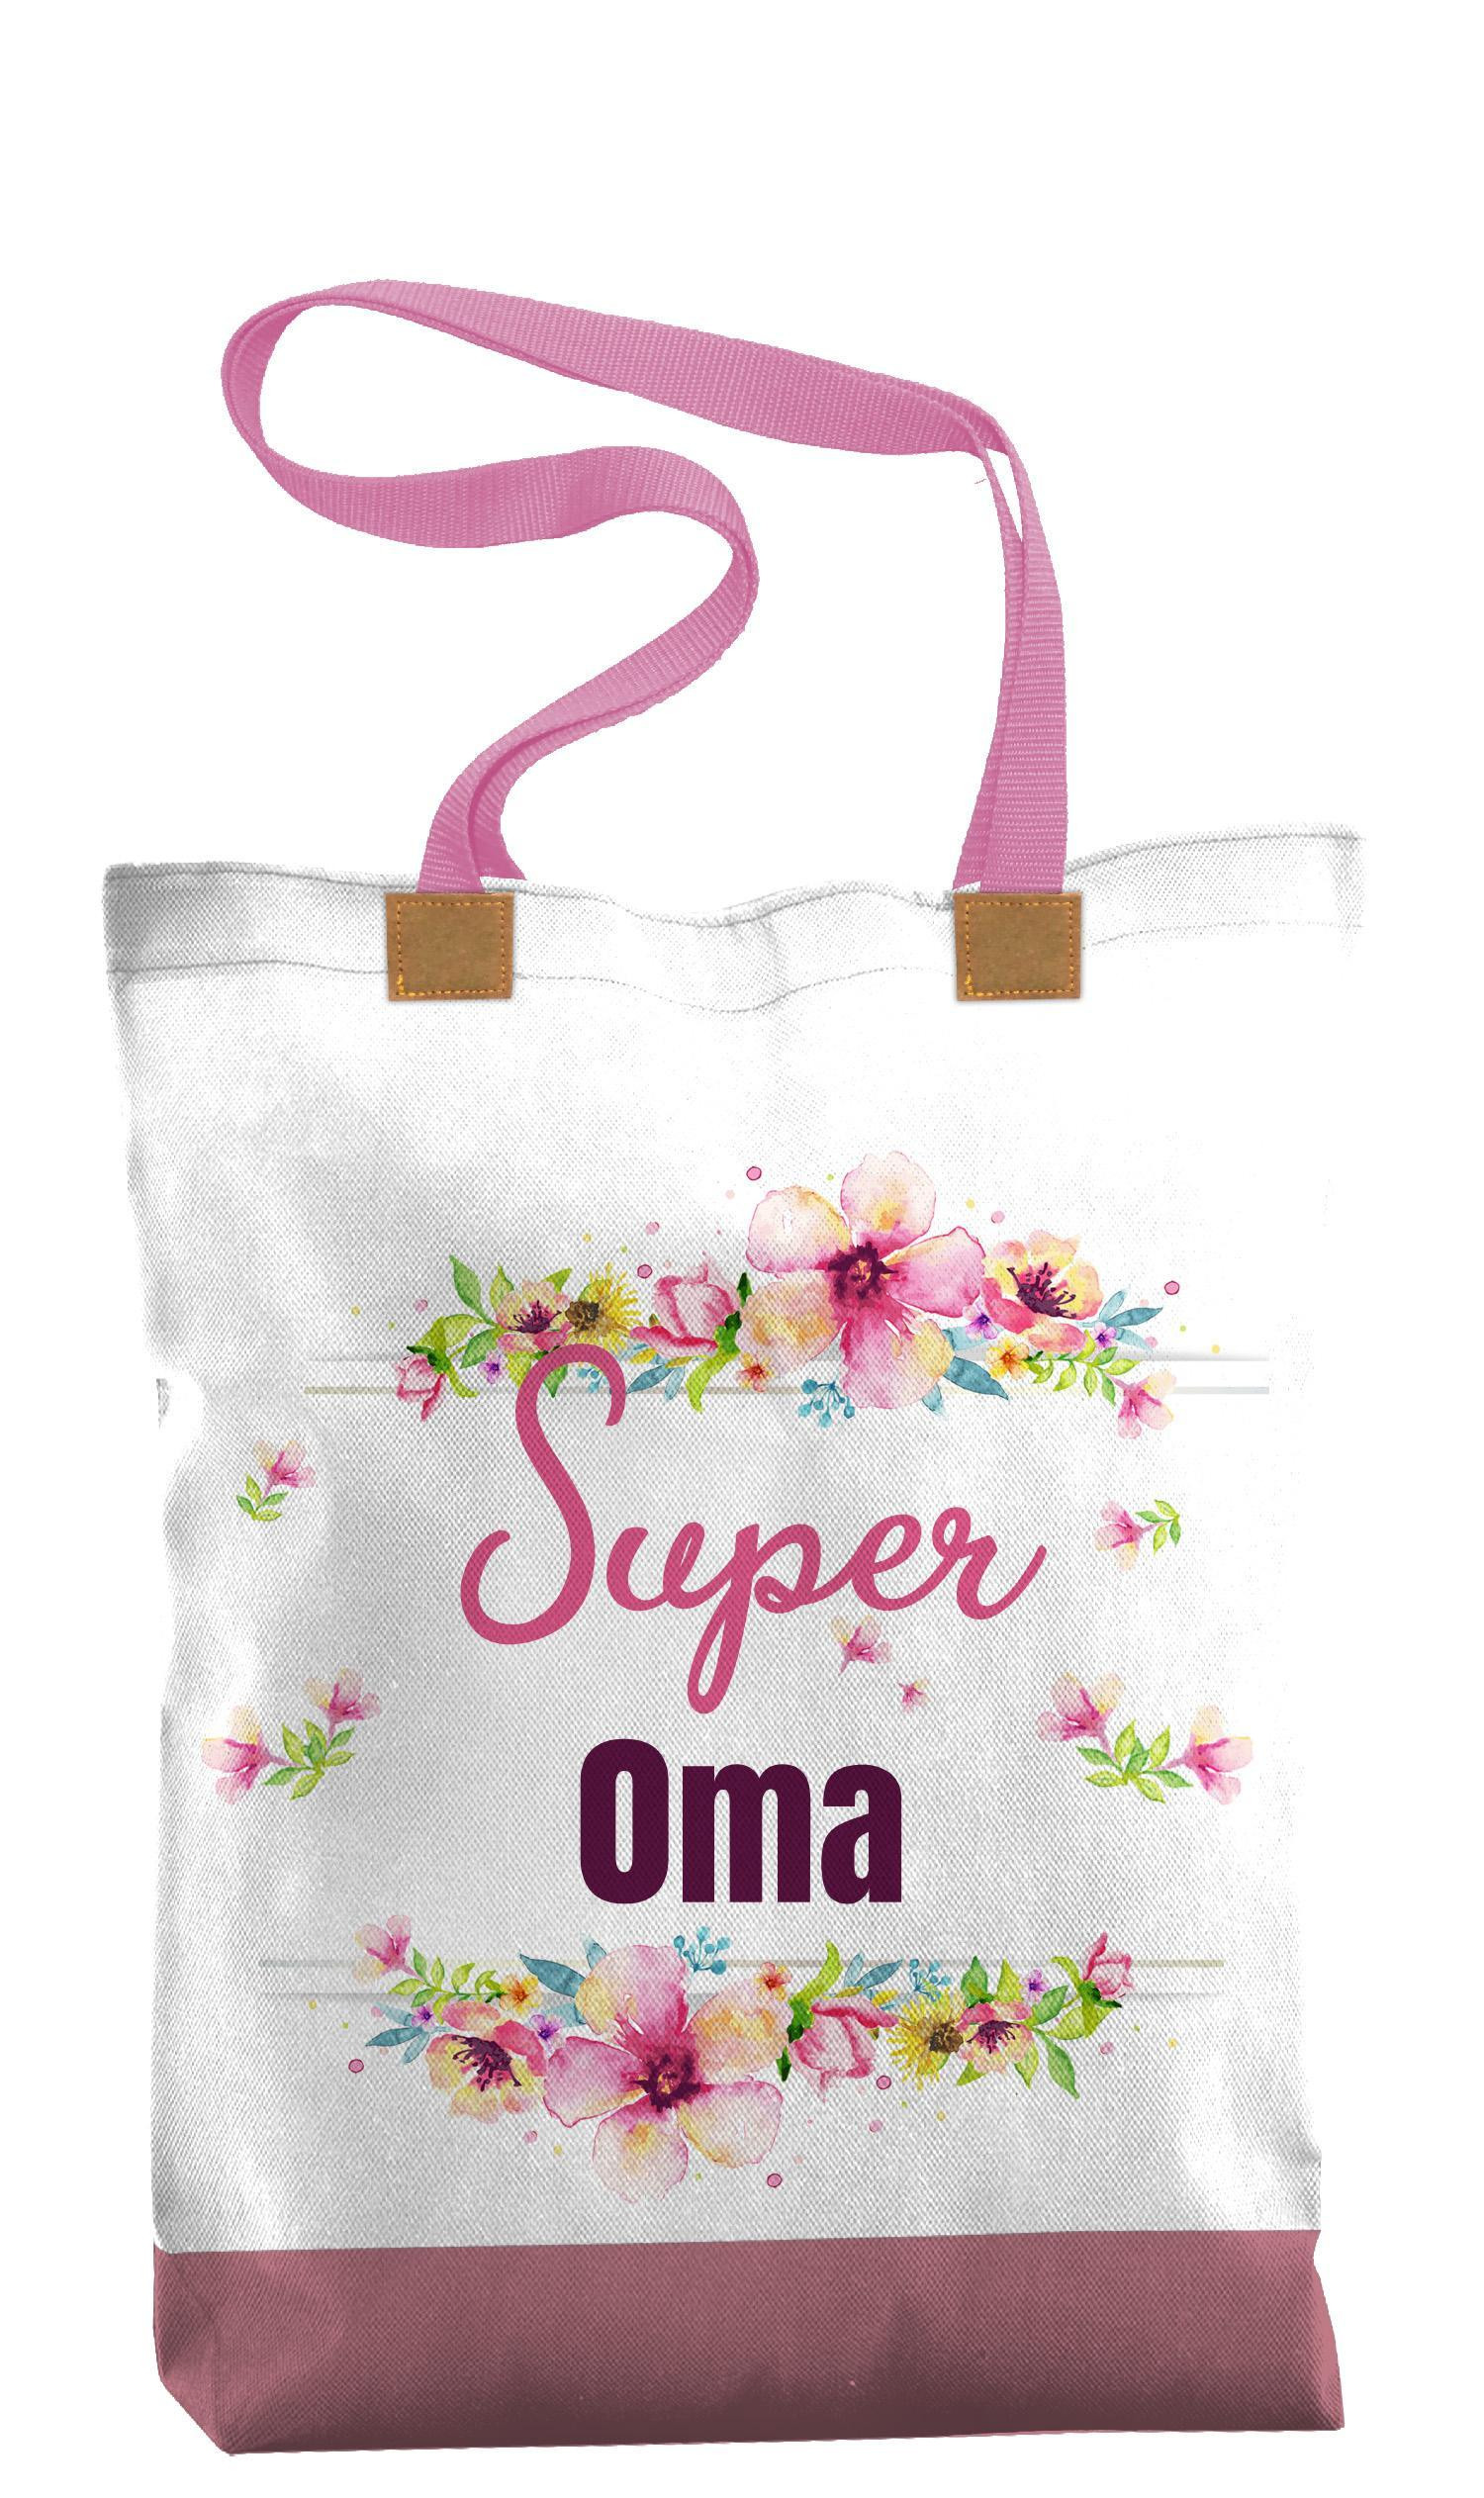 SHOPPER BAG - SHOPPERKA - SUPER OMA / pink - sewing set